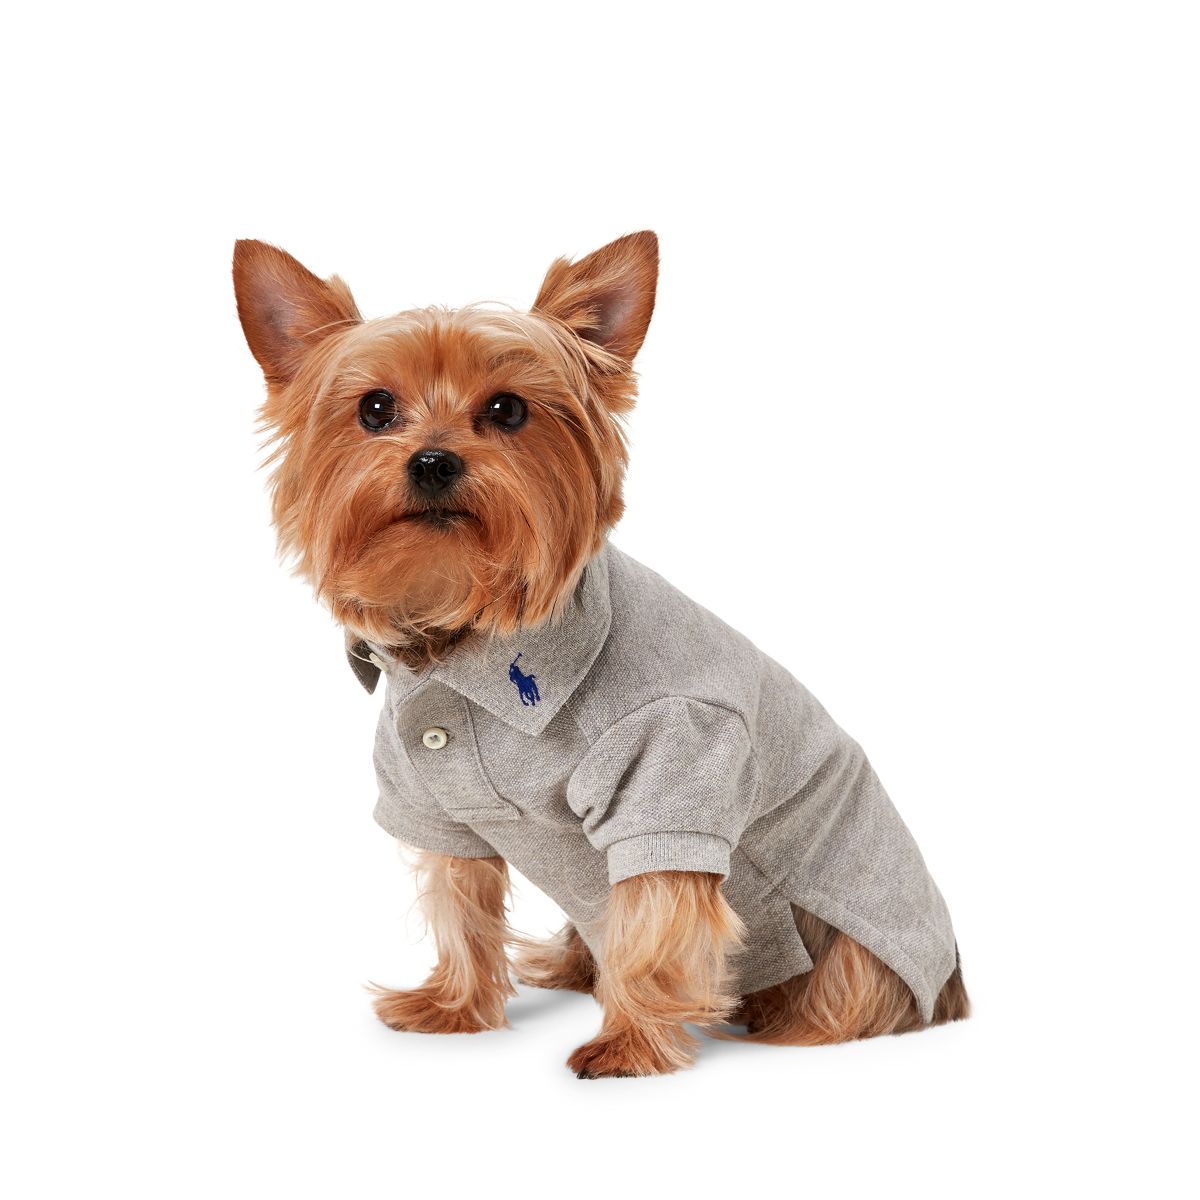 Cotton Mesh Dog Polo Shirt